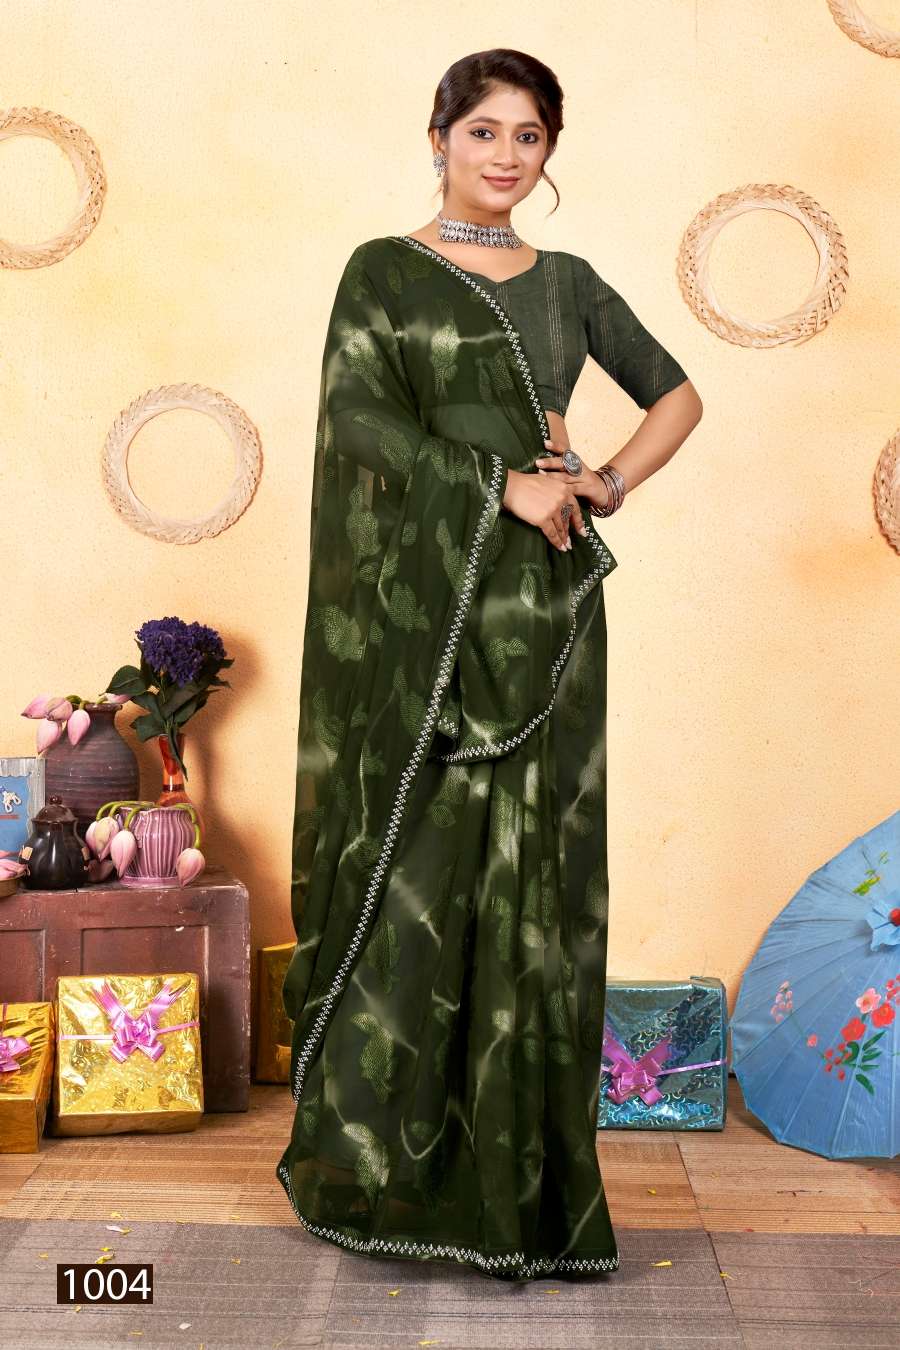 Saroj Ruhani Designer Fancy Fabric Saree Wholesale catalog